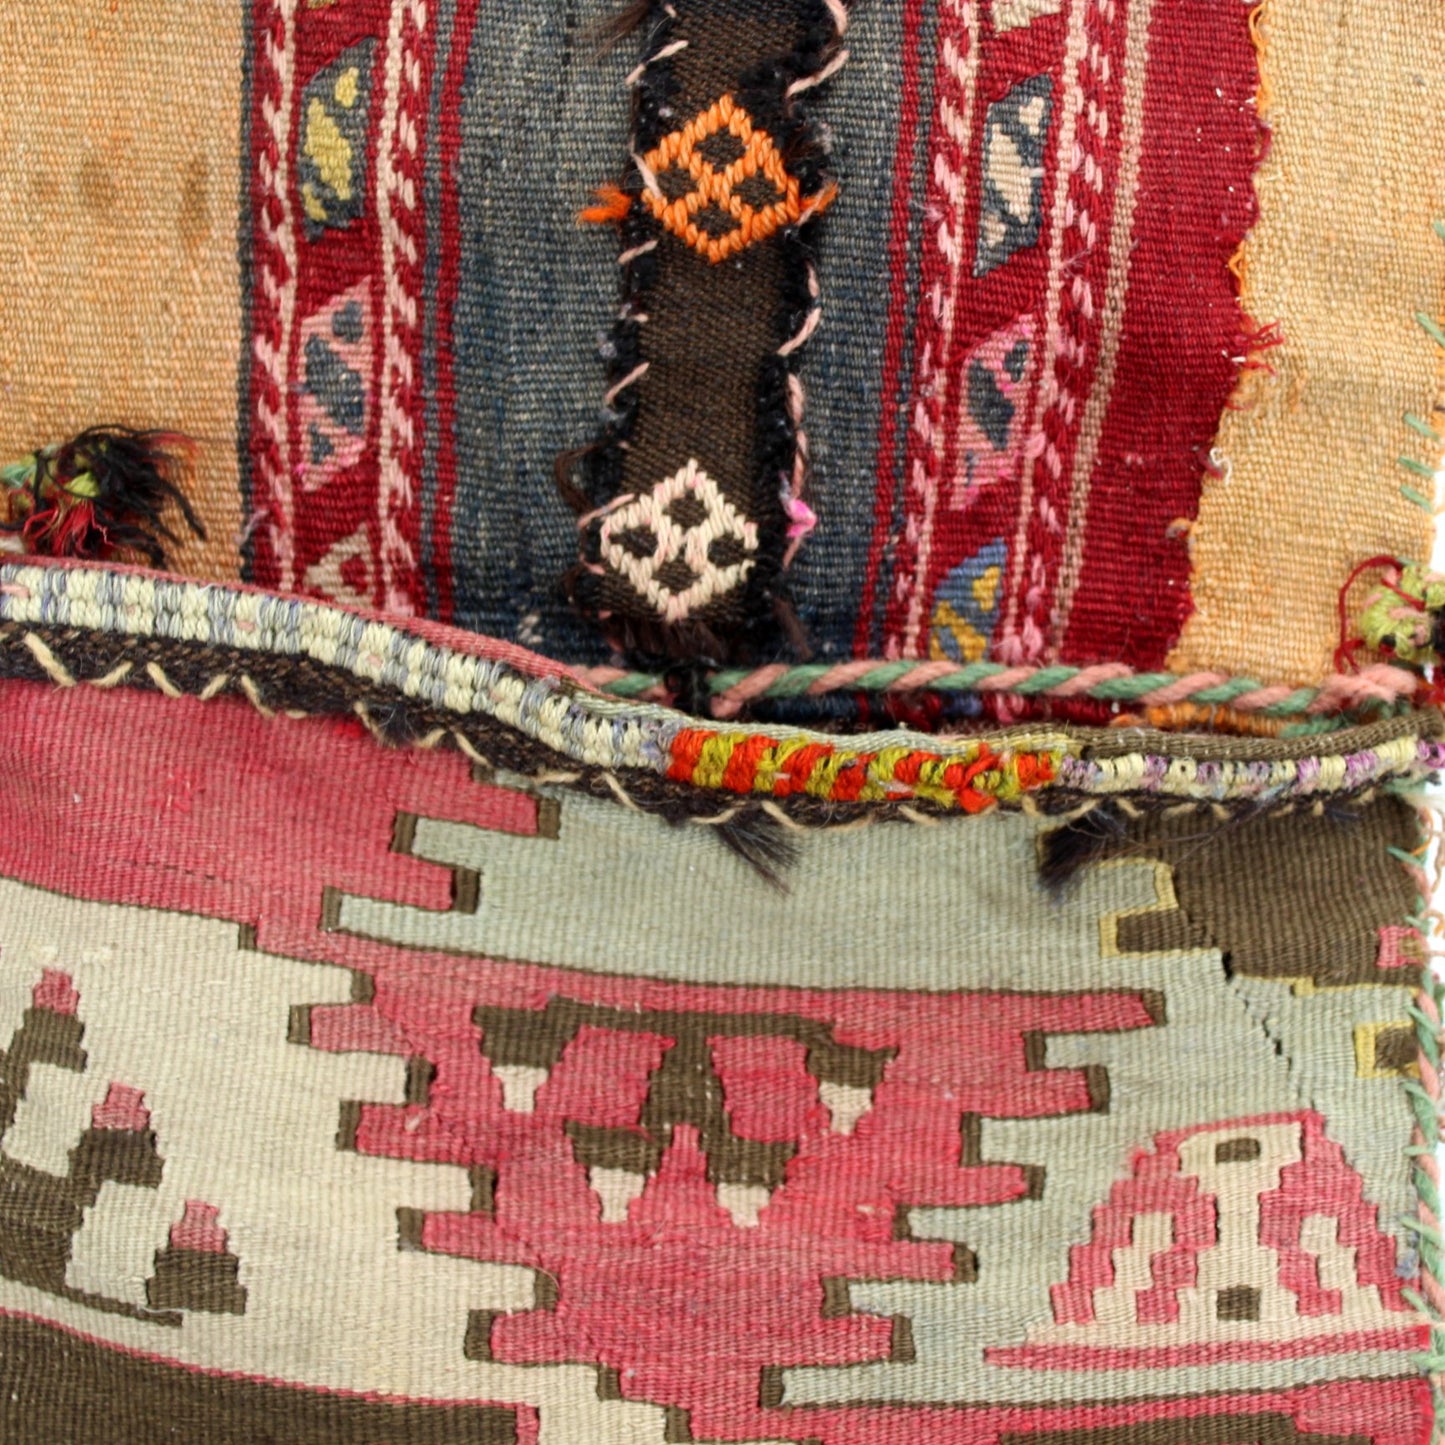 Old Camel Saddle Bag Kilim Hand Woven Used Shabby Authentic Decor Item cloeup center portion of blanket